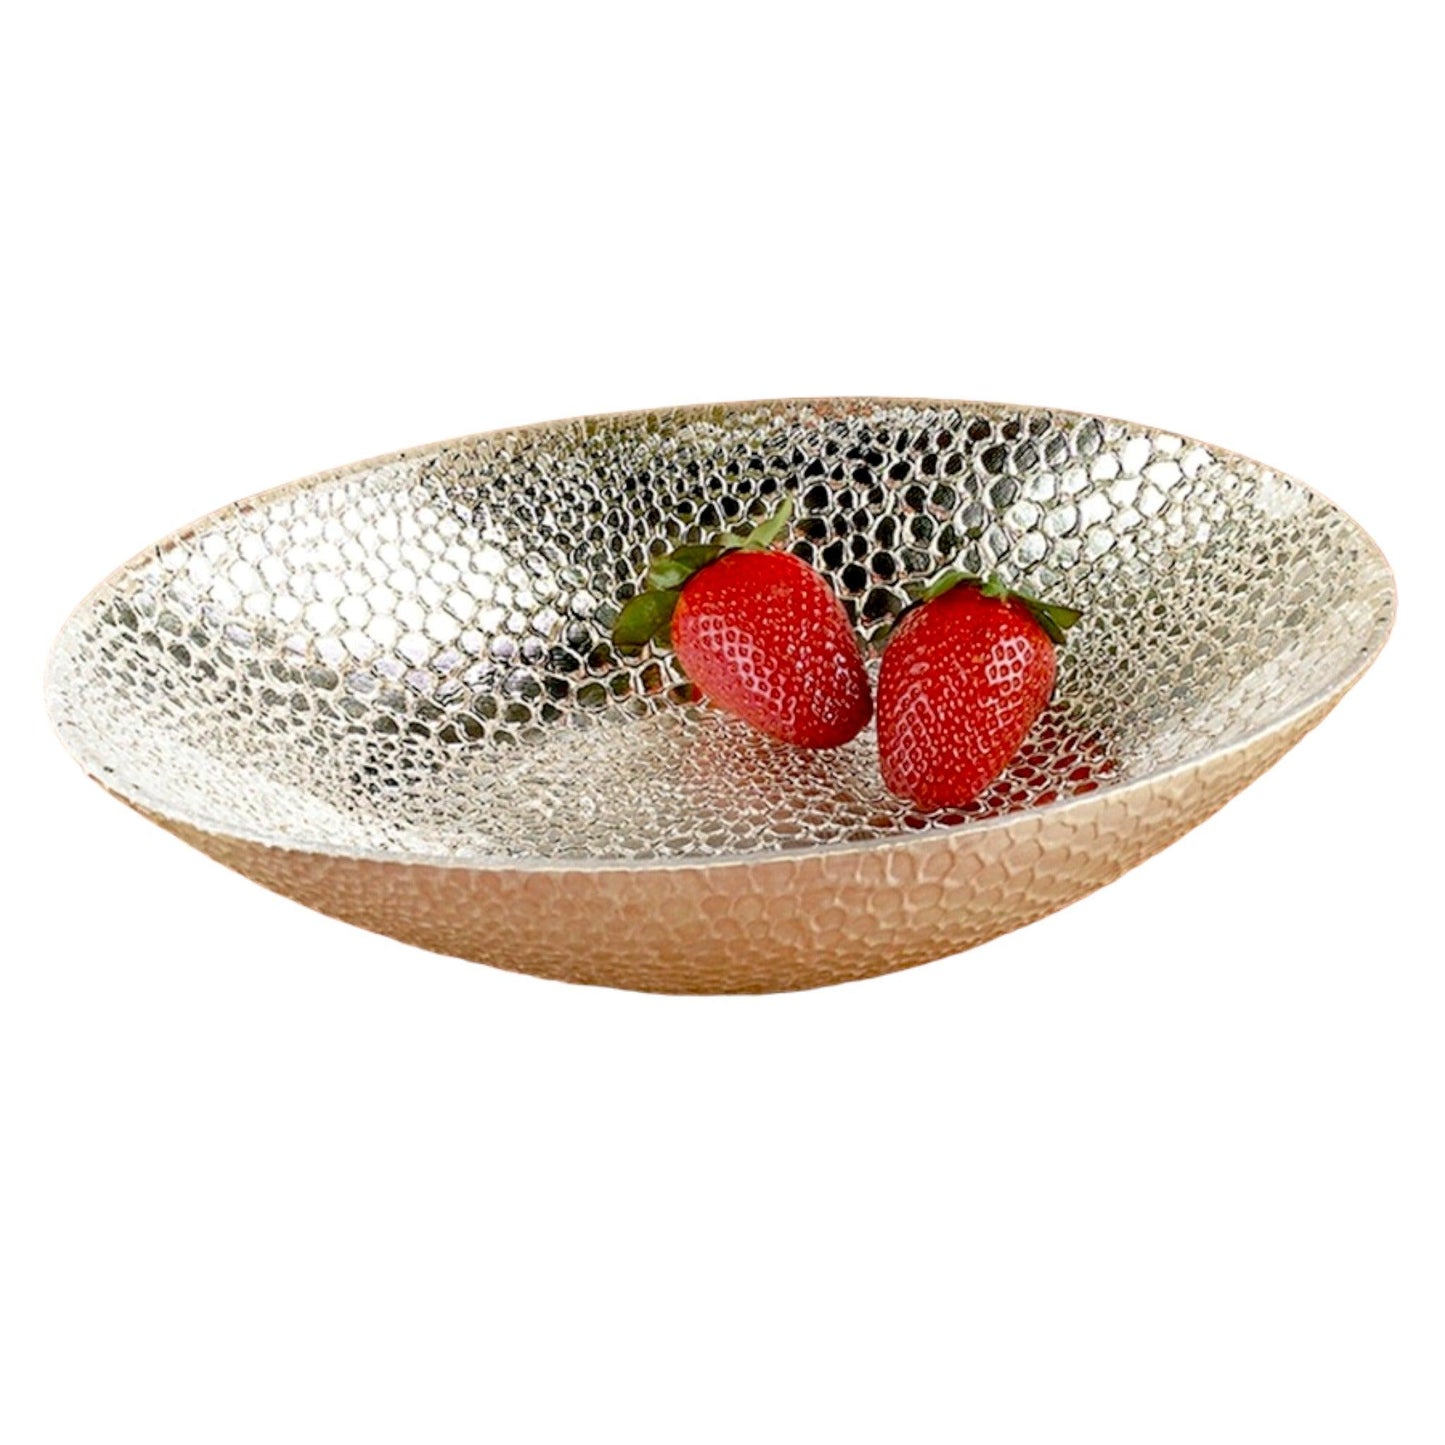 Crystal Fruit Bowl with Genuine Silver Leaf Snakeskin Pattern - Nature Home Decor